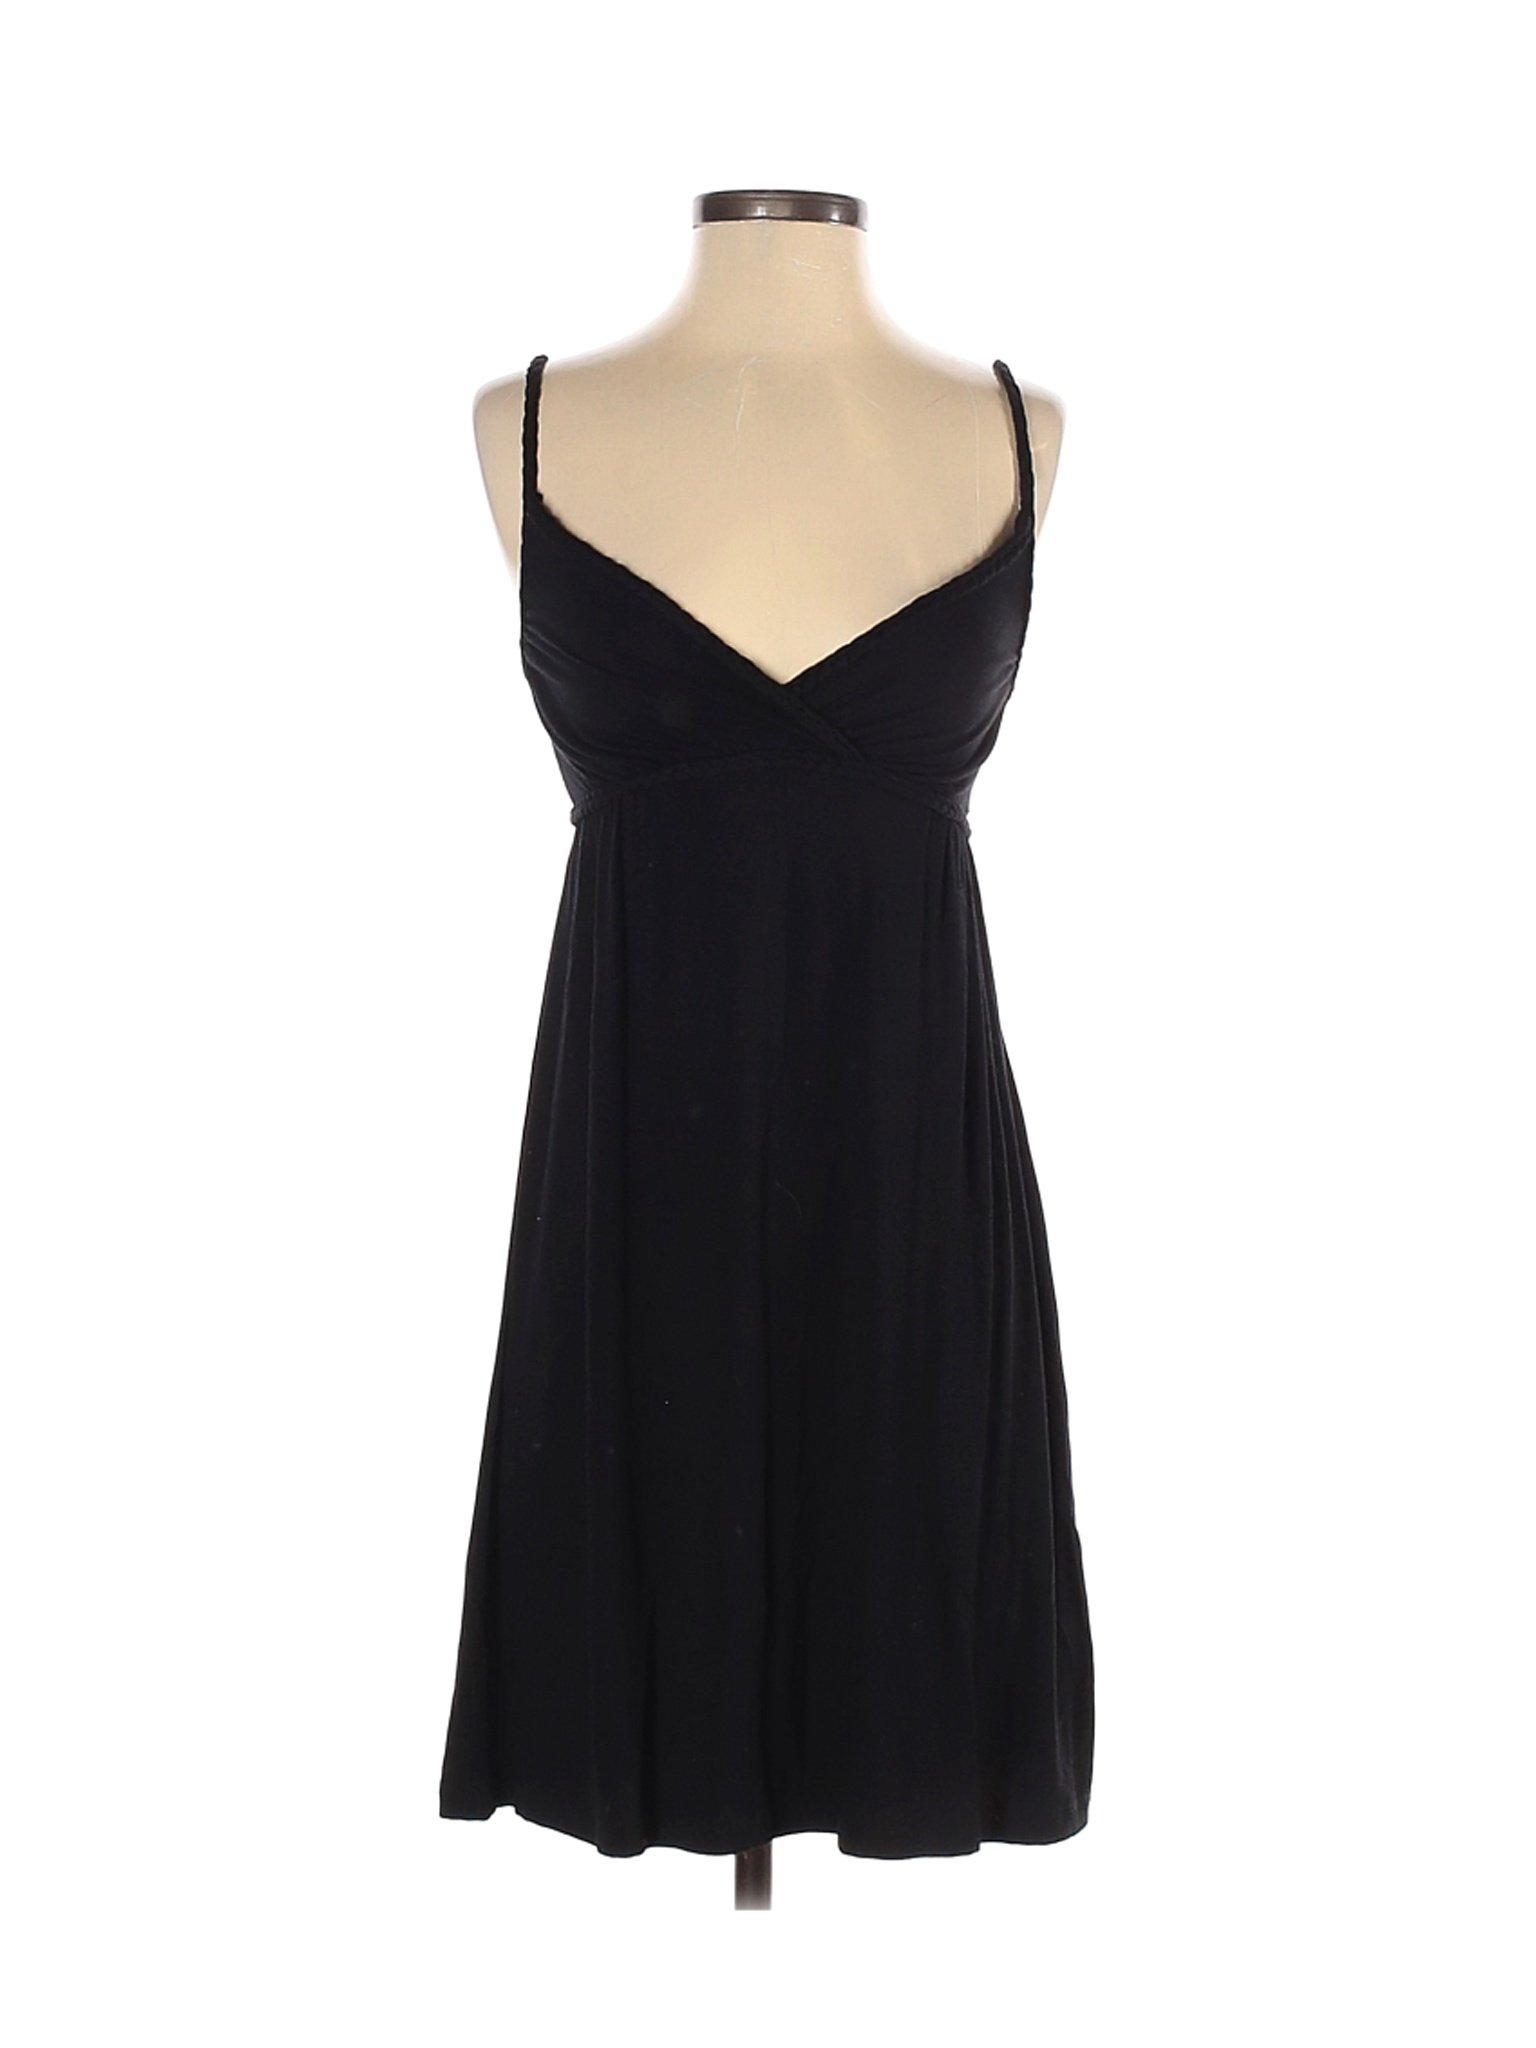 H&M Women Black Casual Dress 4 | eBay